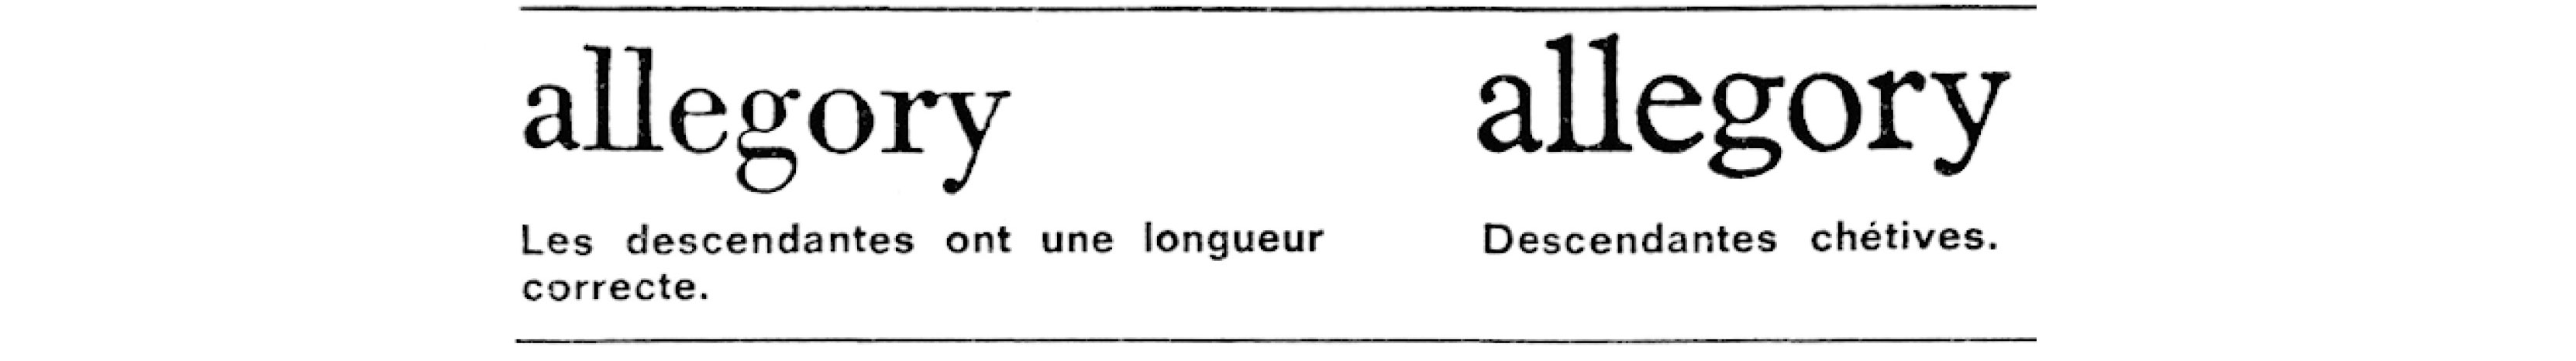 Jan-Tschichold-te-parle-de-typographie-article-Persee-communication-et-langages-1985-schema-05